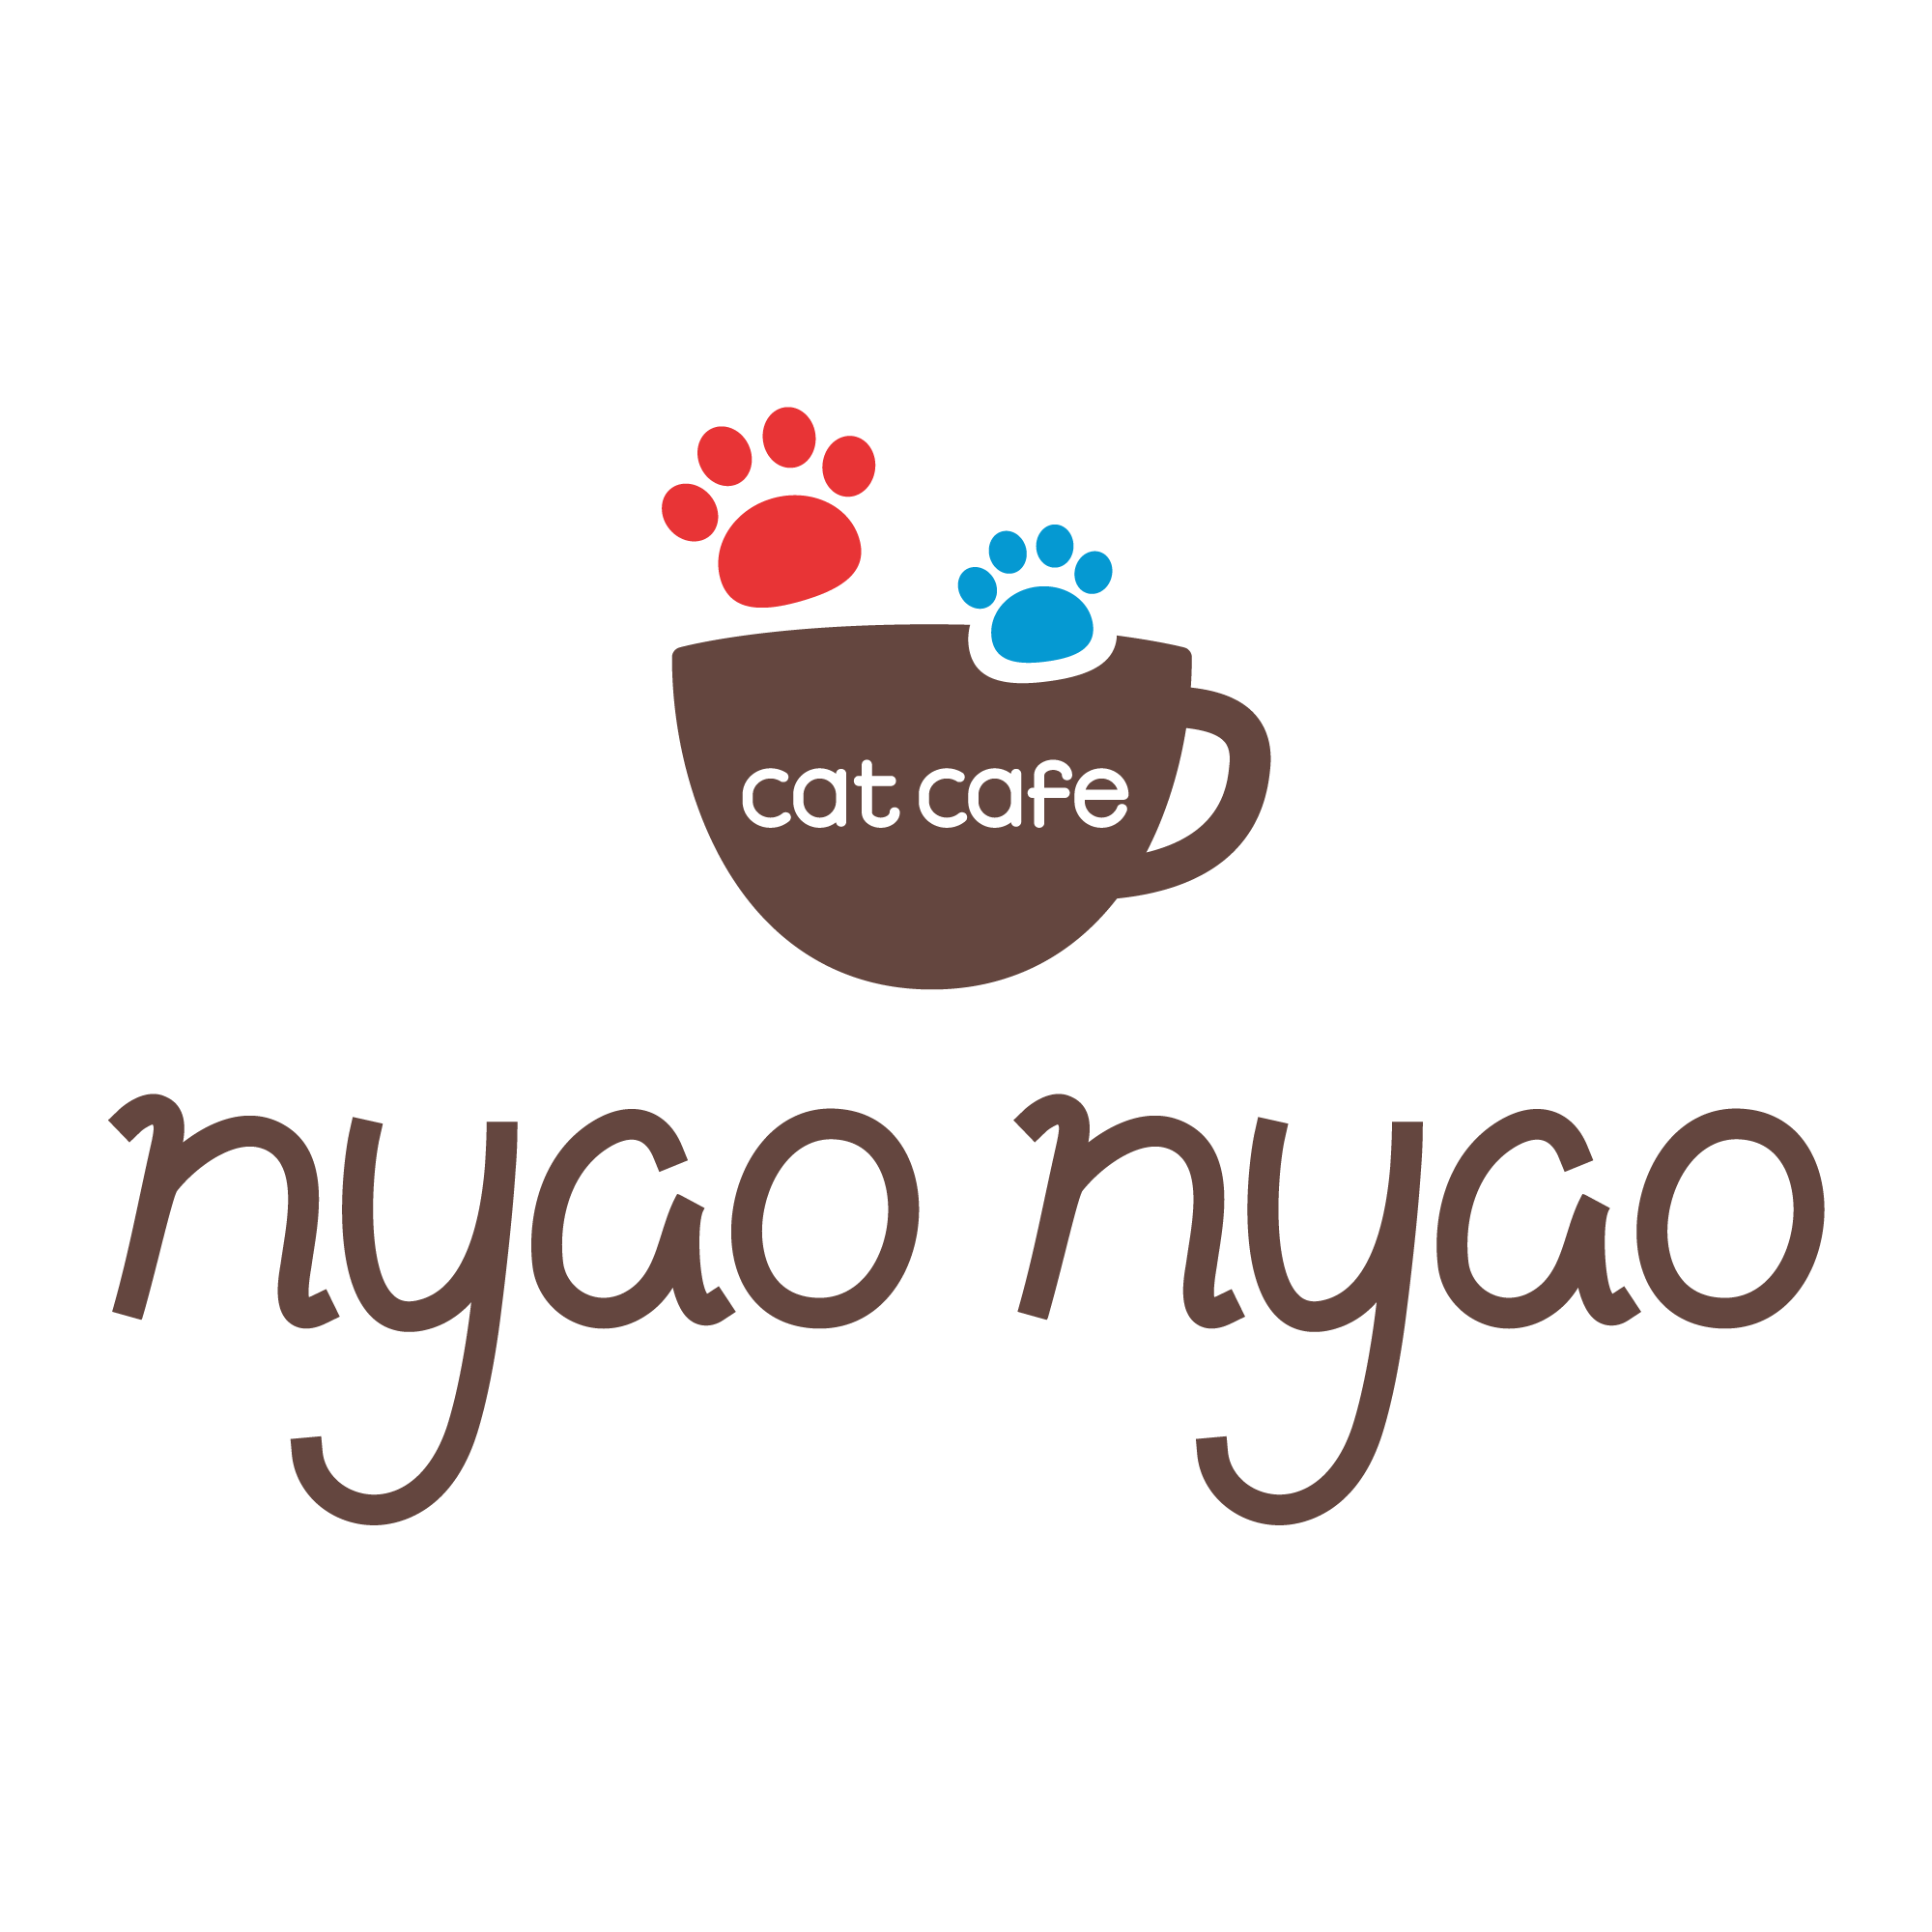 nontic（ノンティック）猫カフェ nyao nyao ロゴデザイン